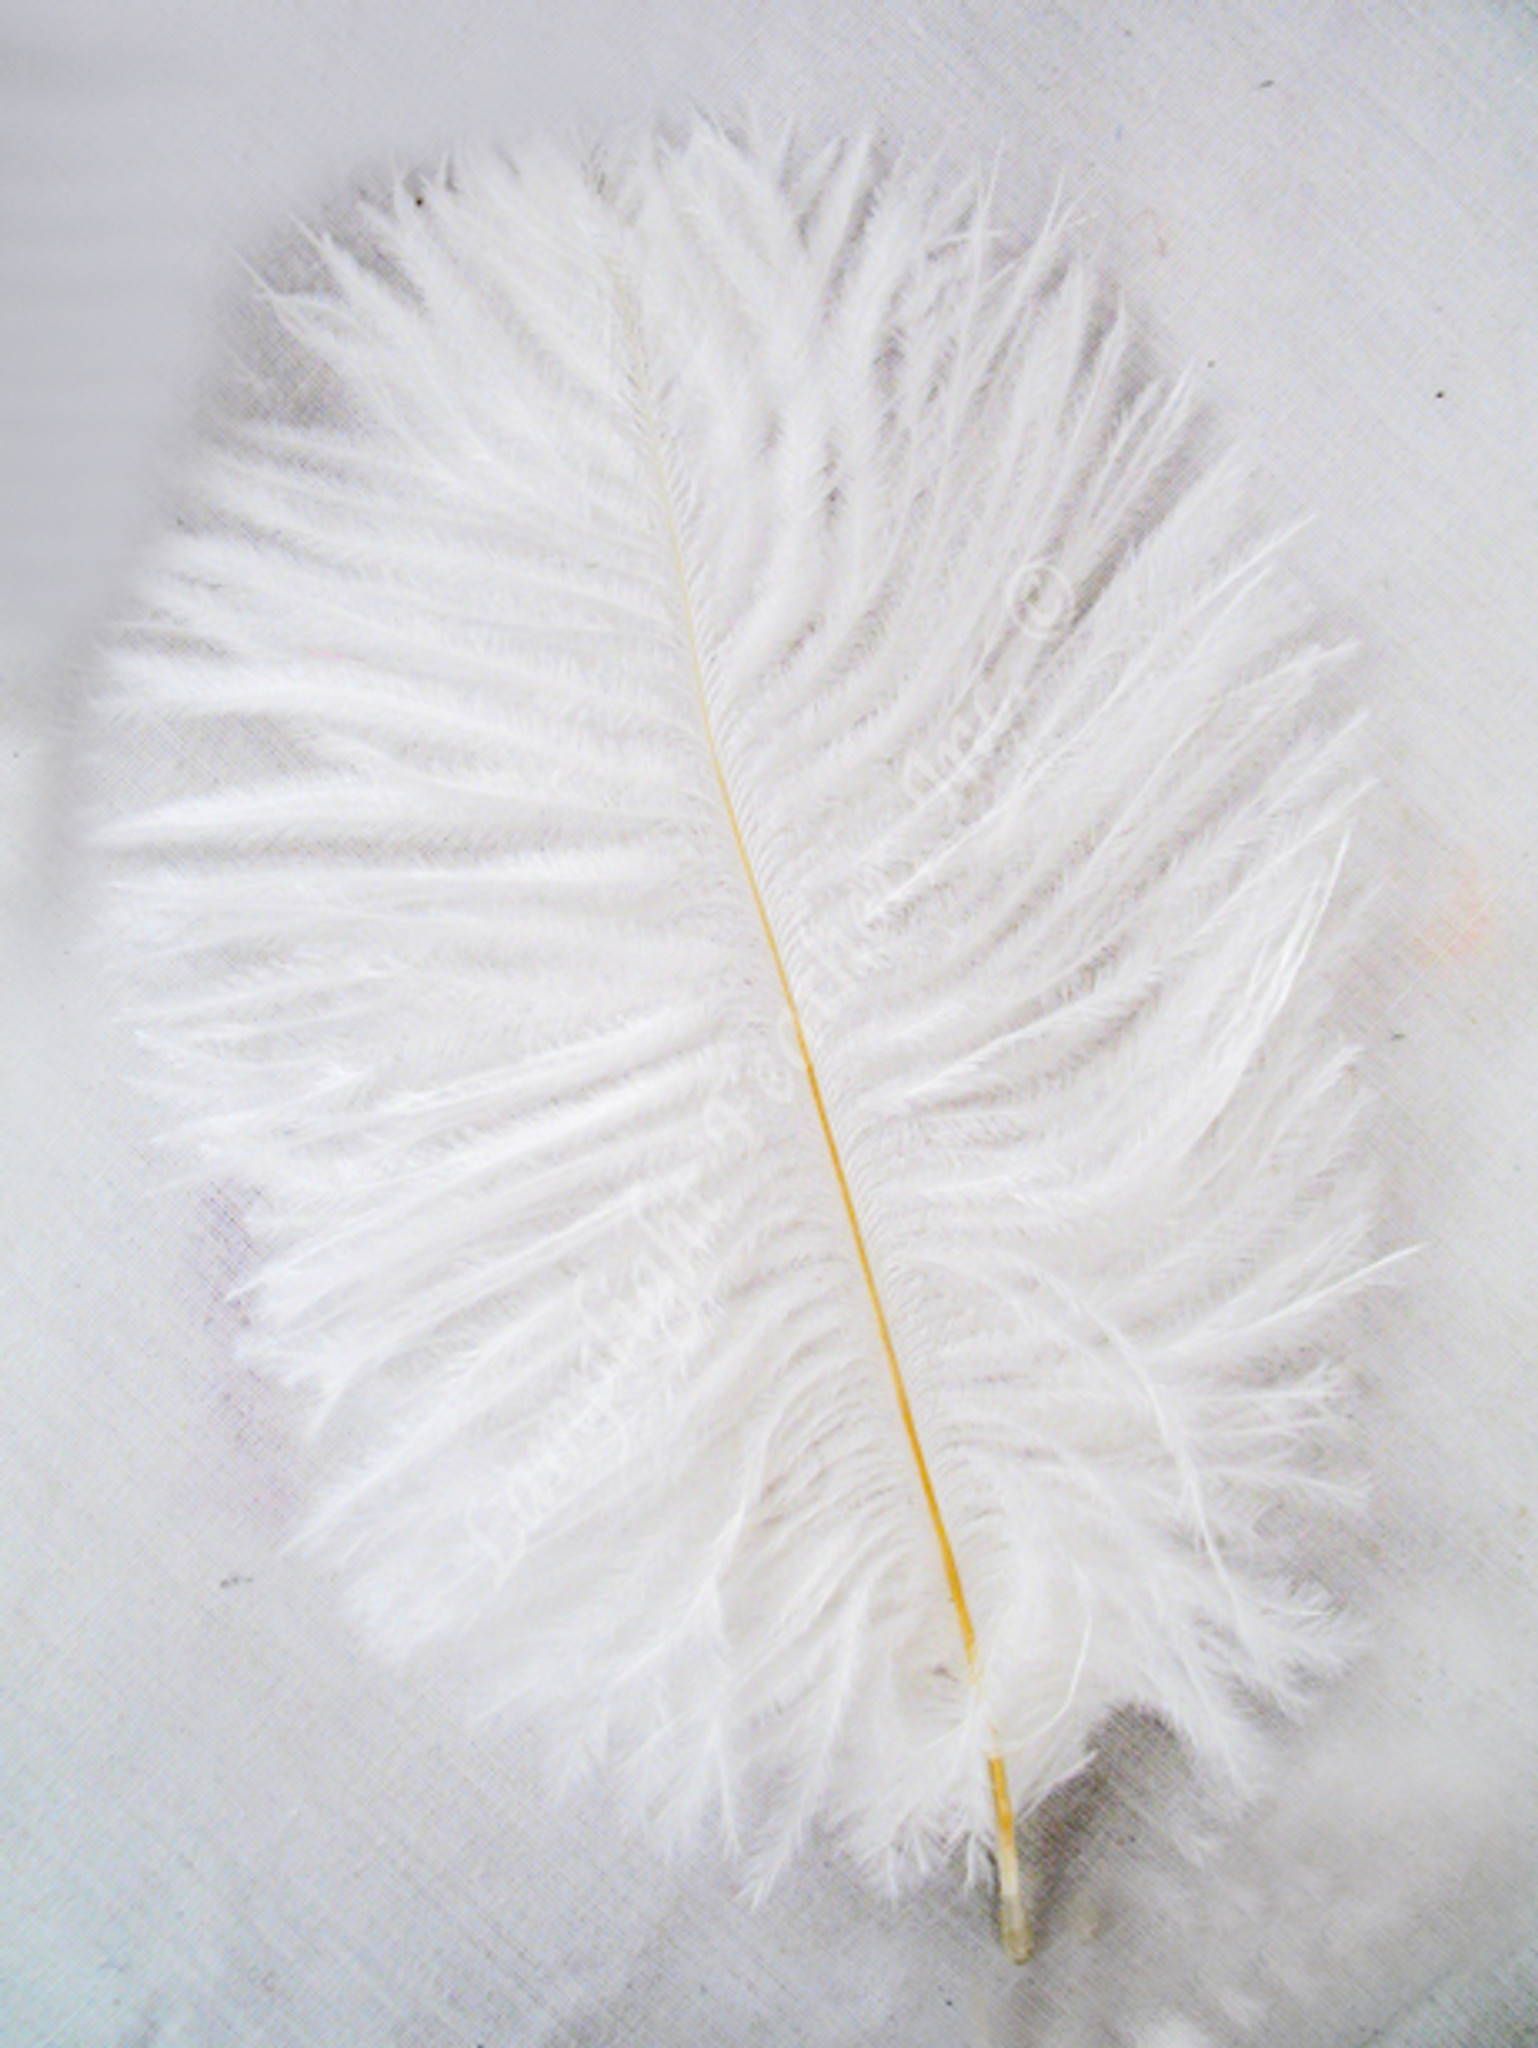 White Mini Ostrich Feathers 5-8 Inch per25